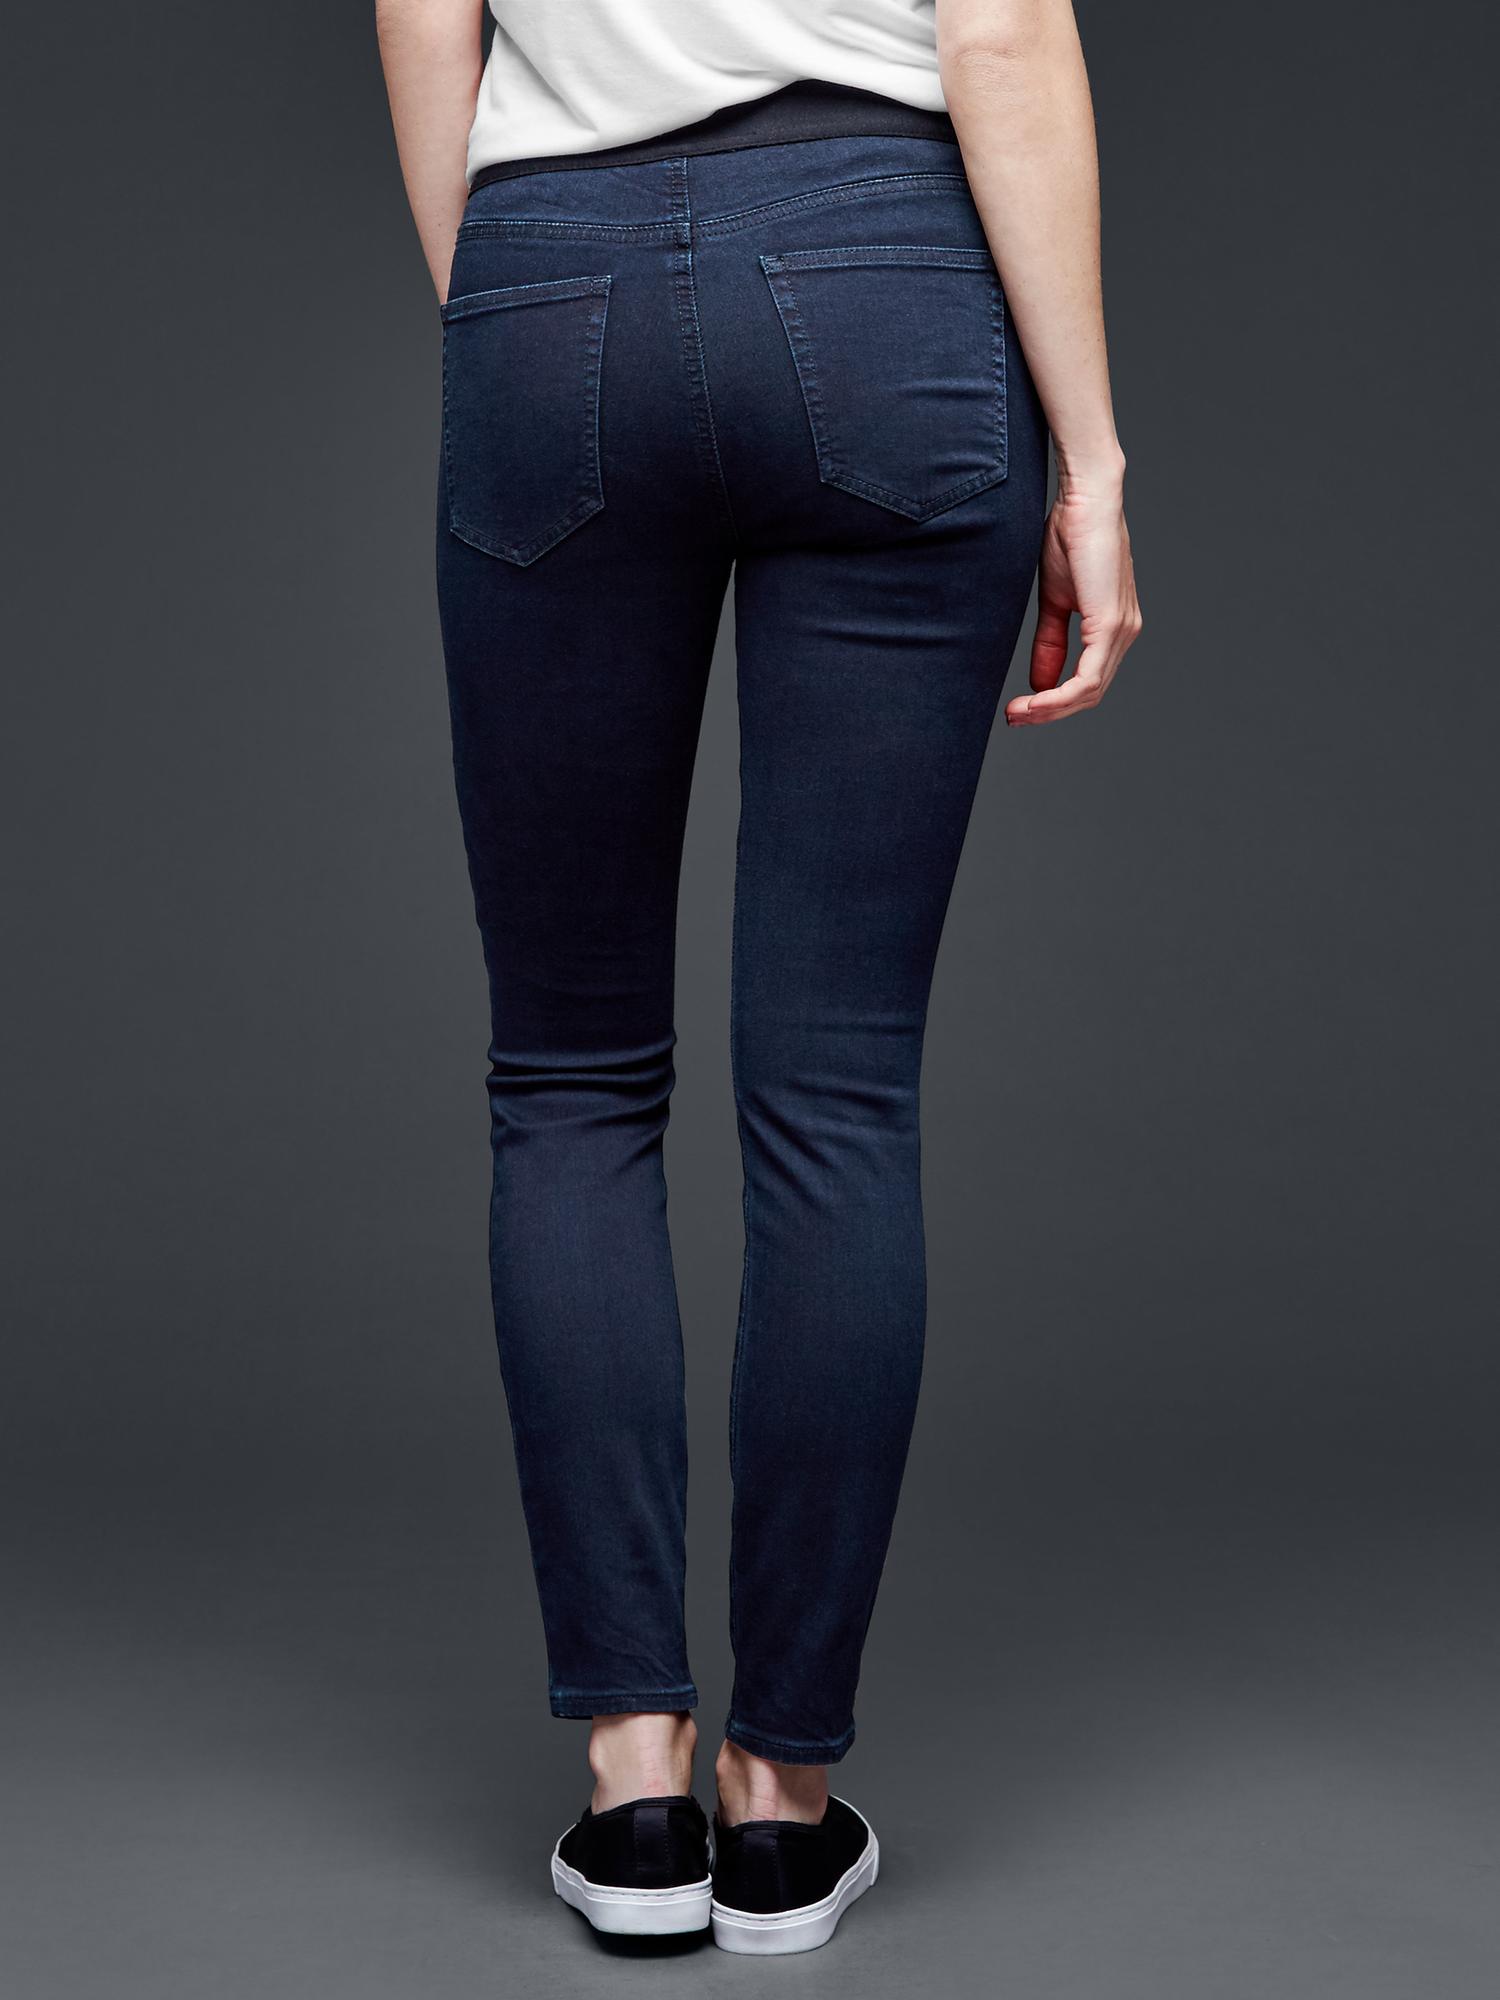 Gap 1969 Womens Legging Denim Jeans Stretch Low Rise Pockets Blue